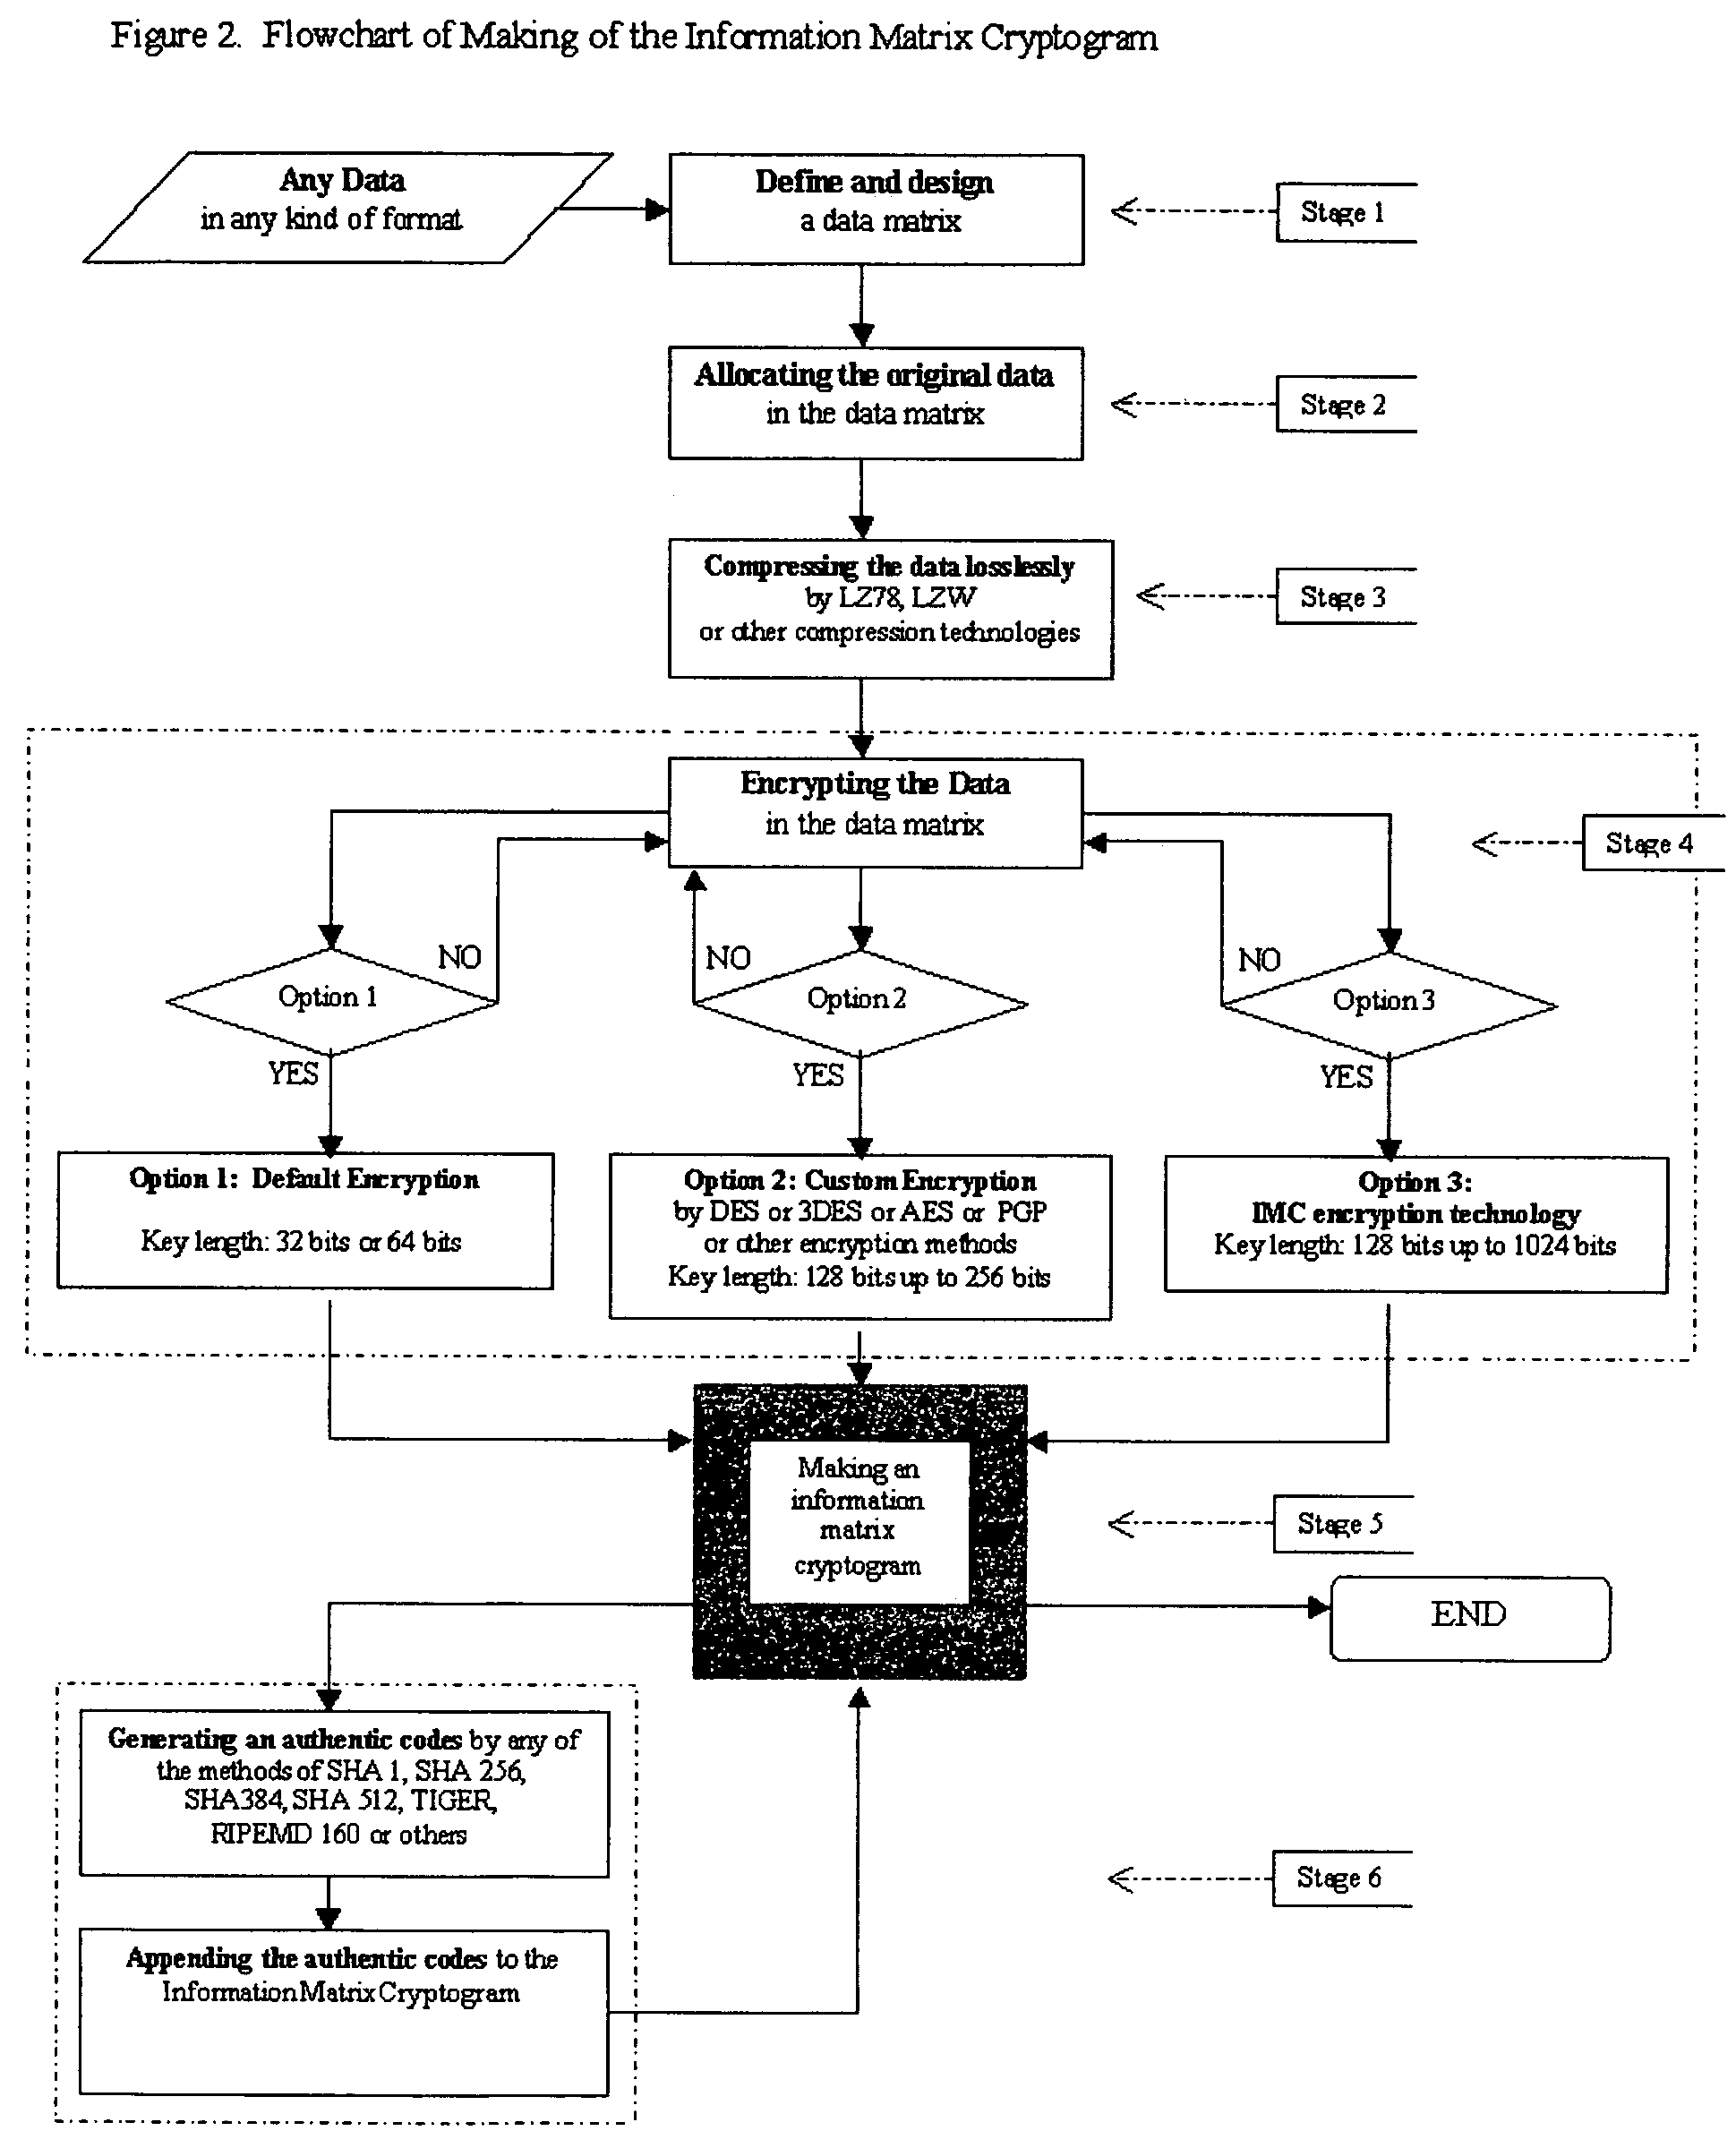 Information matrix cryptogram